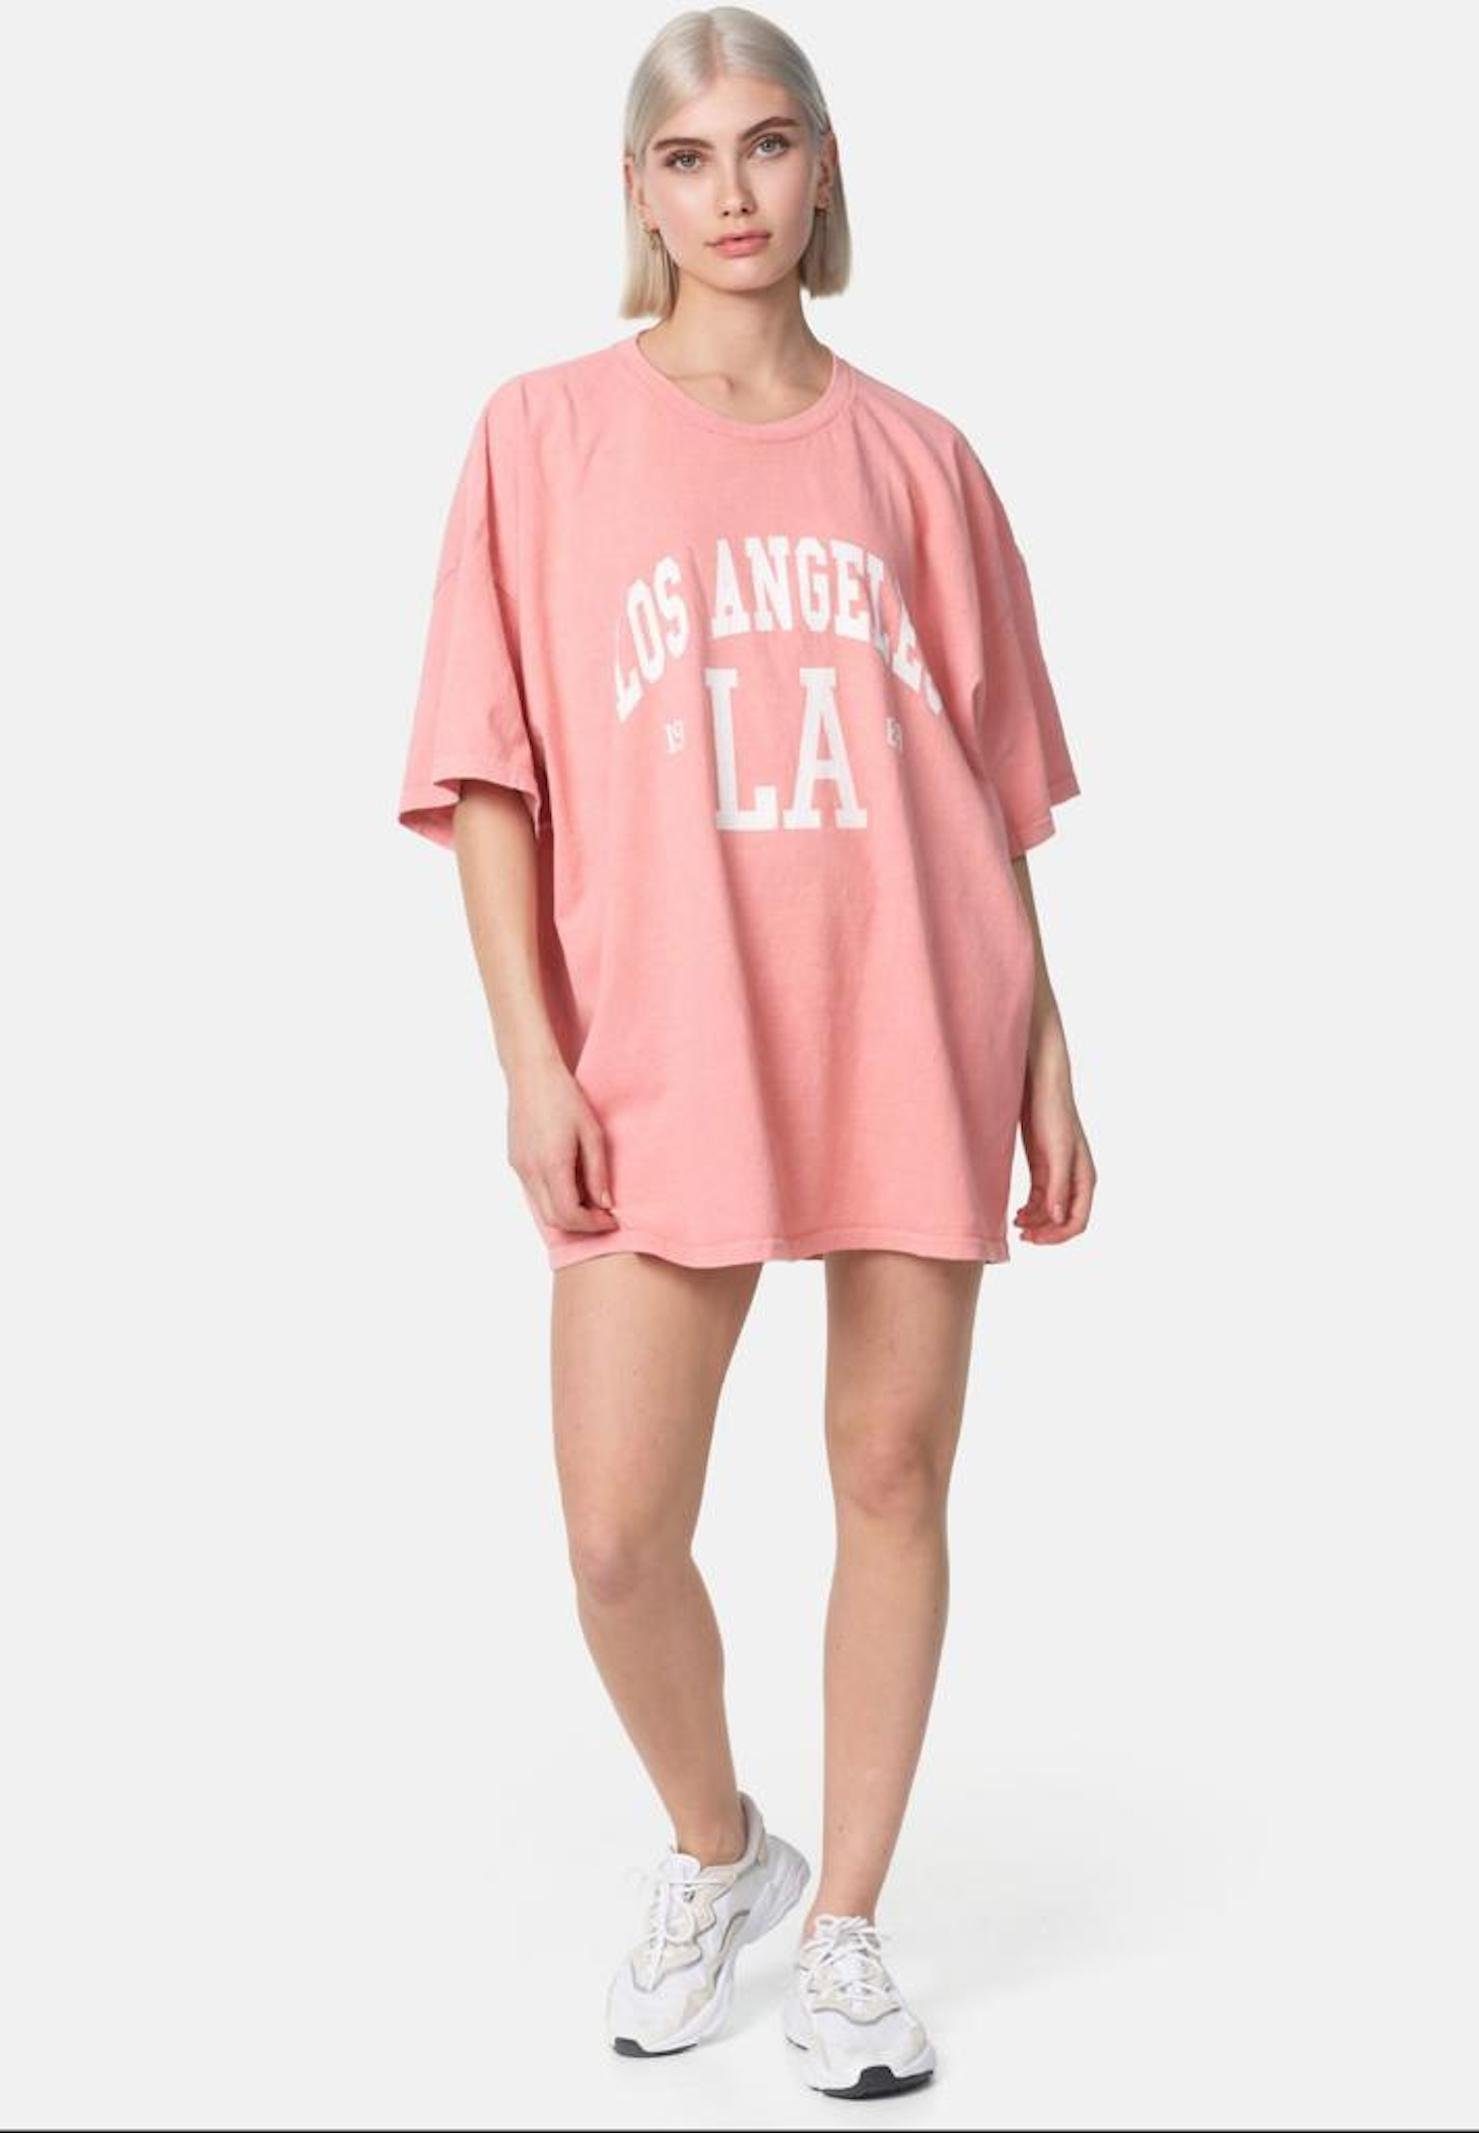 Worldclassca T-Shirt Worldclassca LA Print lang ANGELES Sommer Oversized LOS T-Shirt Tee Apricot